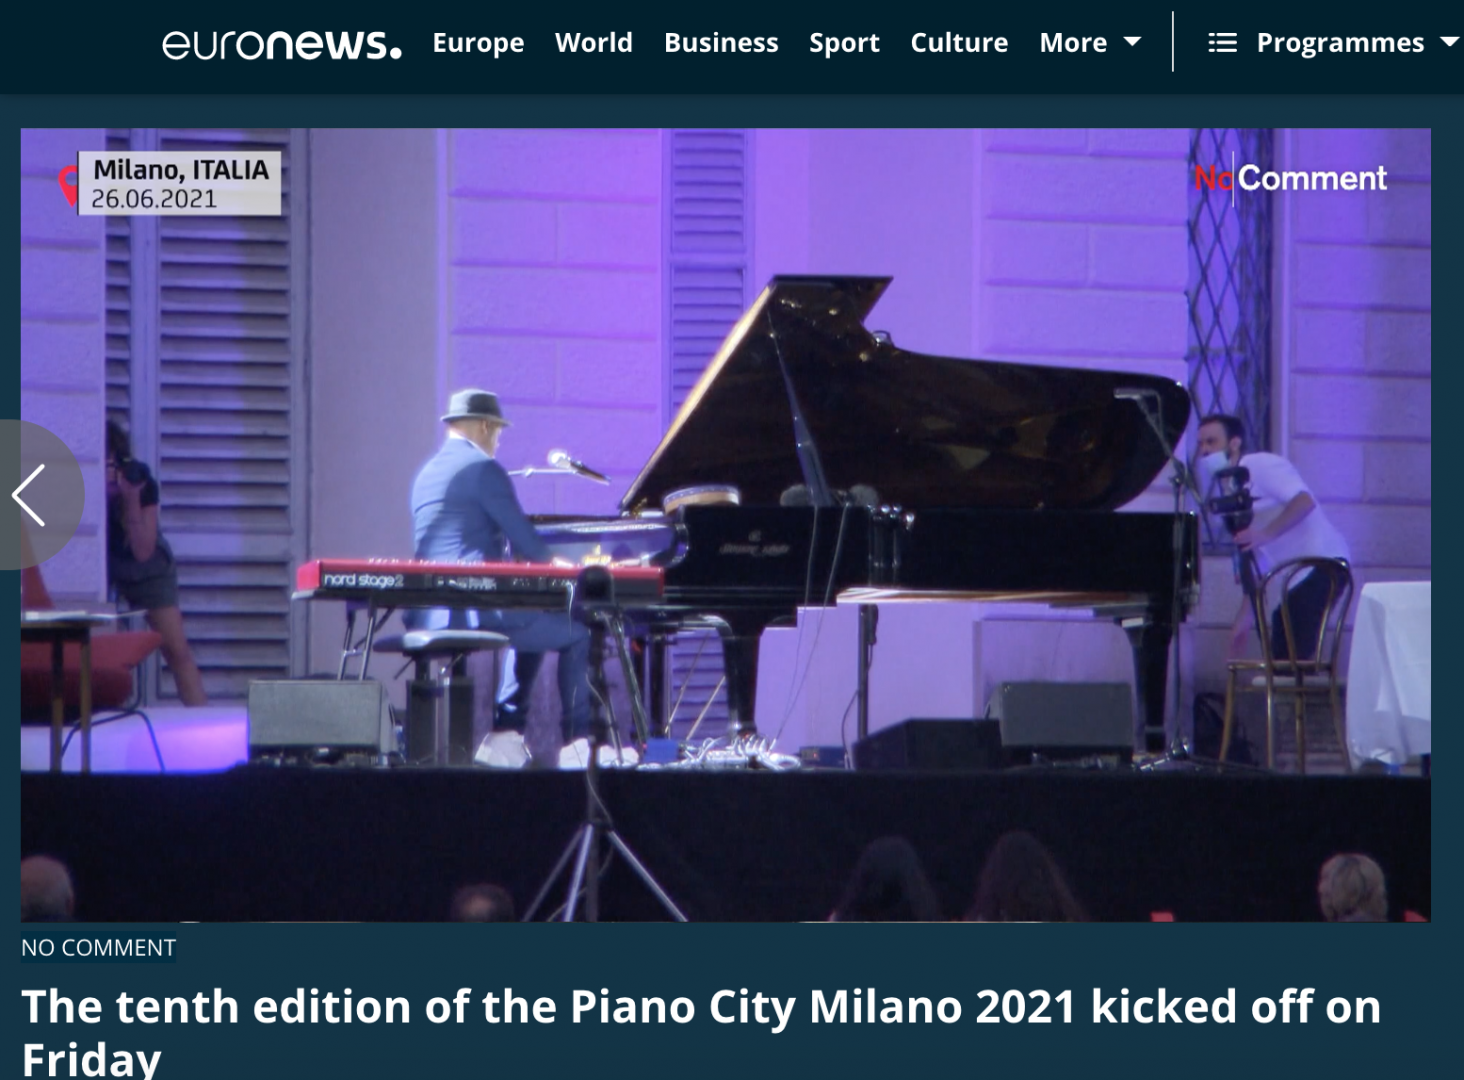 Roberto Fonseca inaugura el Piano City Milano 2021